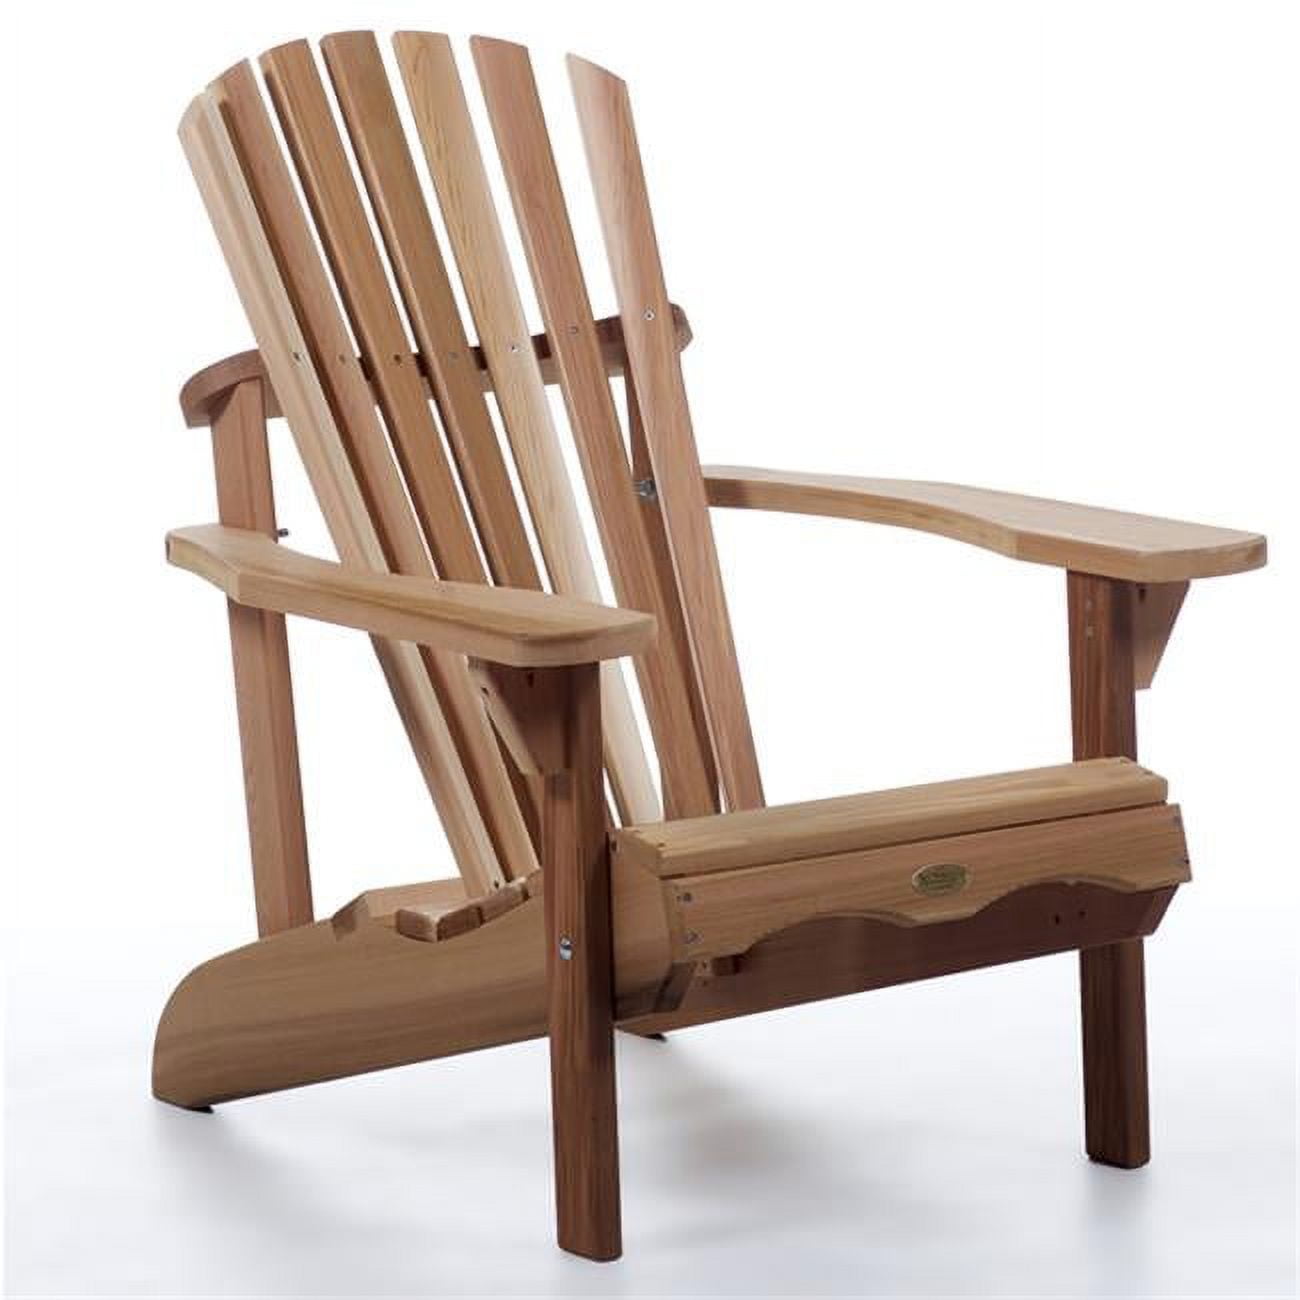 Picture of All Things Cedar AA21 Adirondack Chair - Coastal Cedar Wood